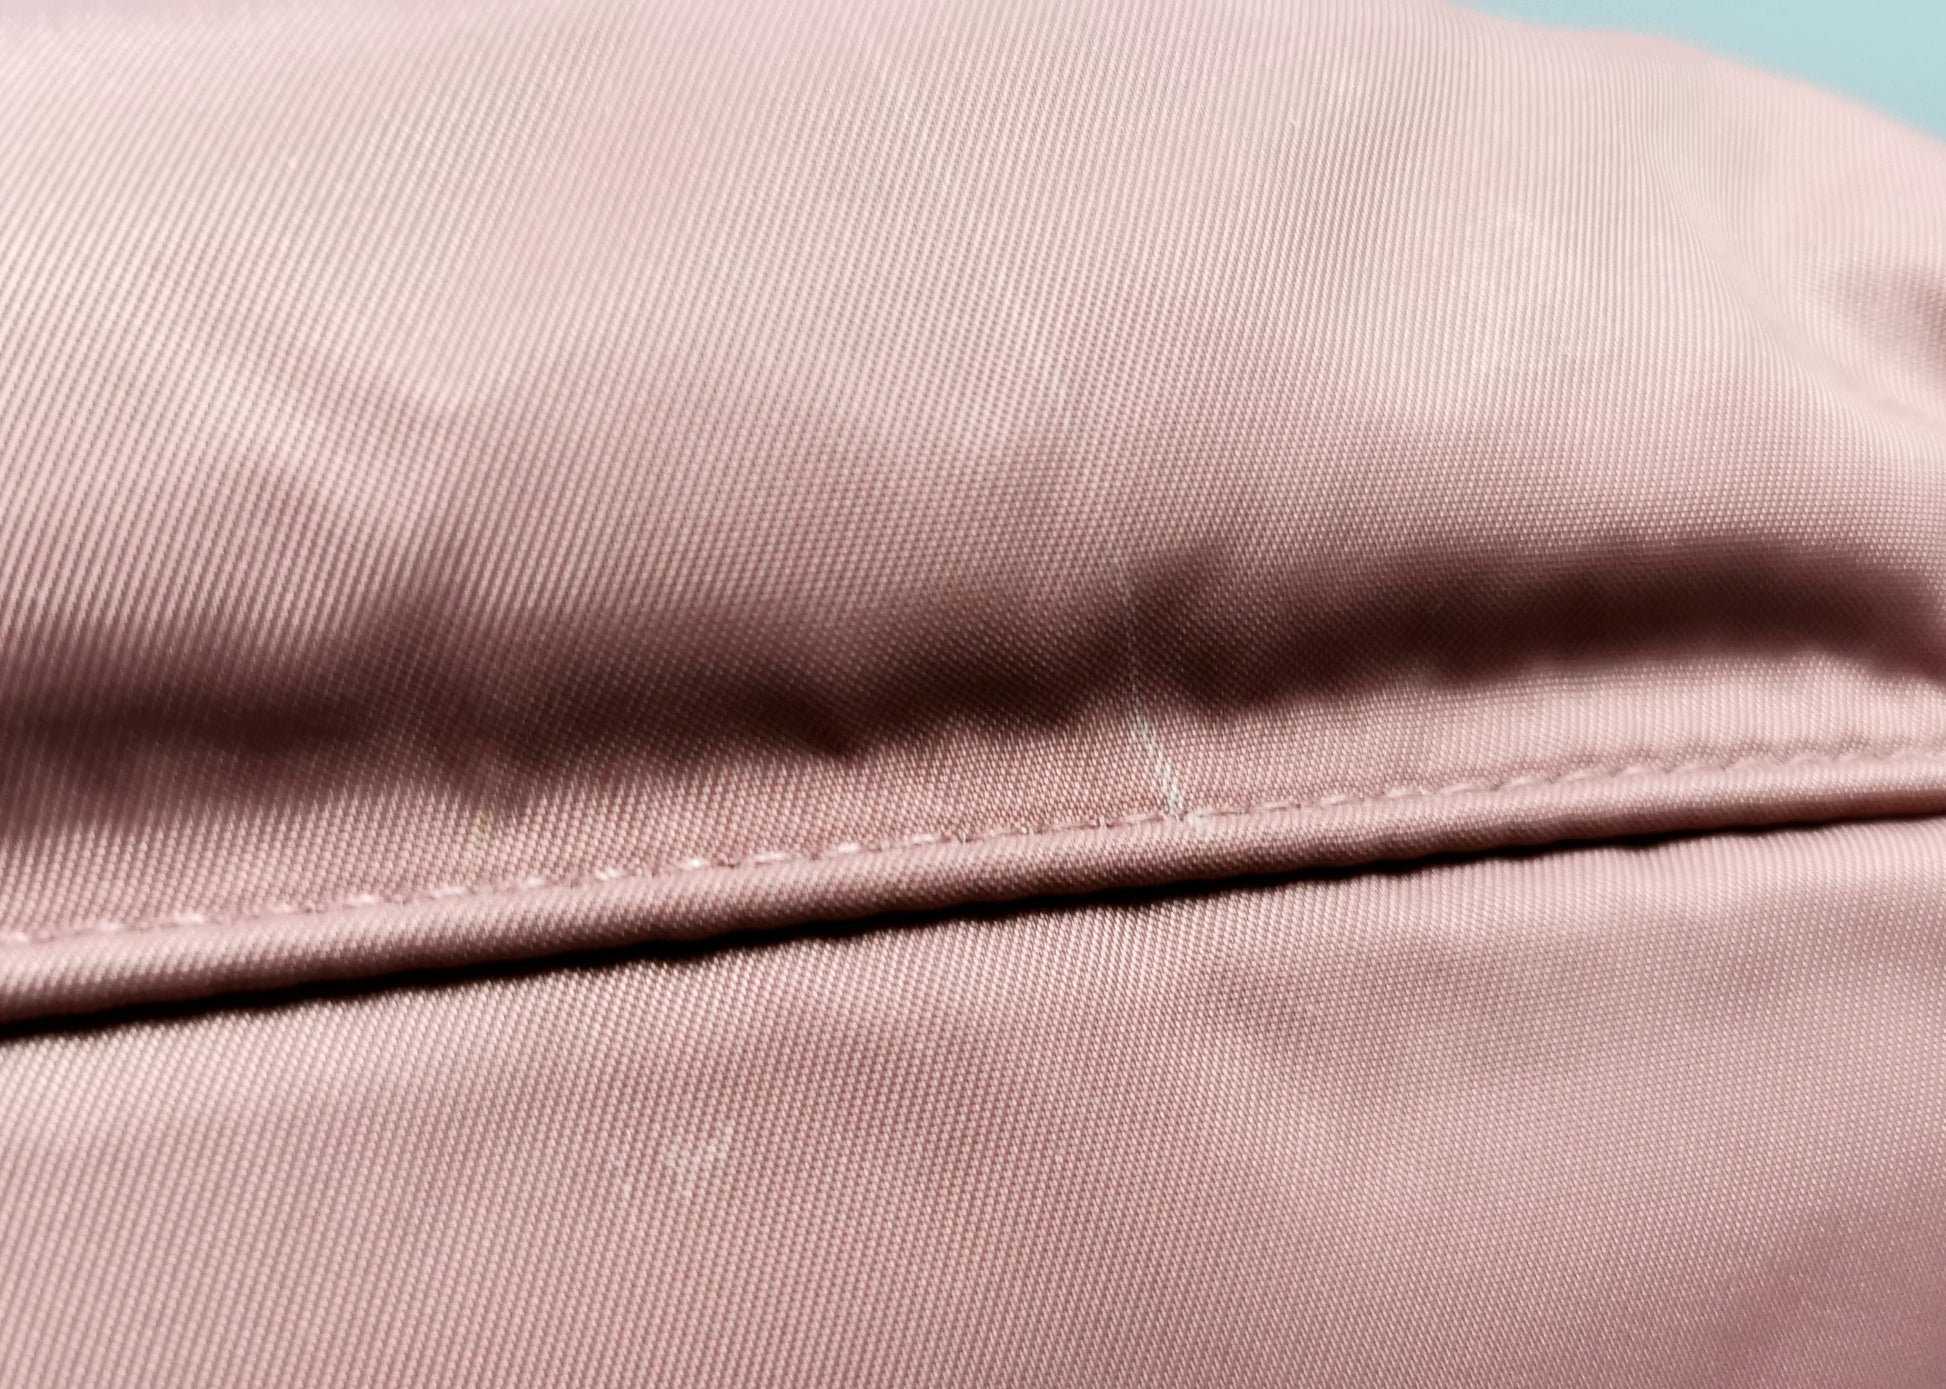 Burberry The Rucksack, pink nylon backpack, Gold tone hardware